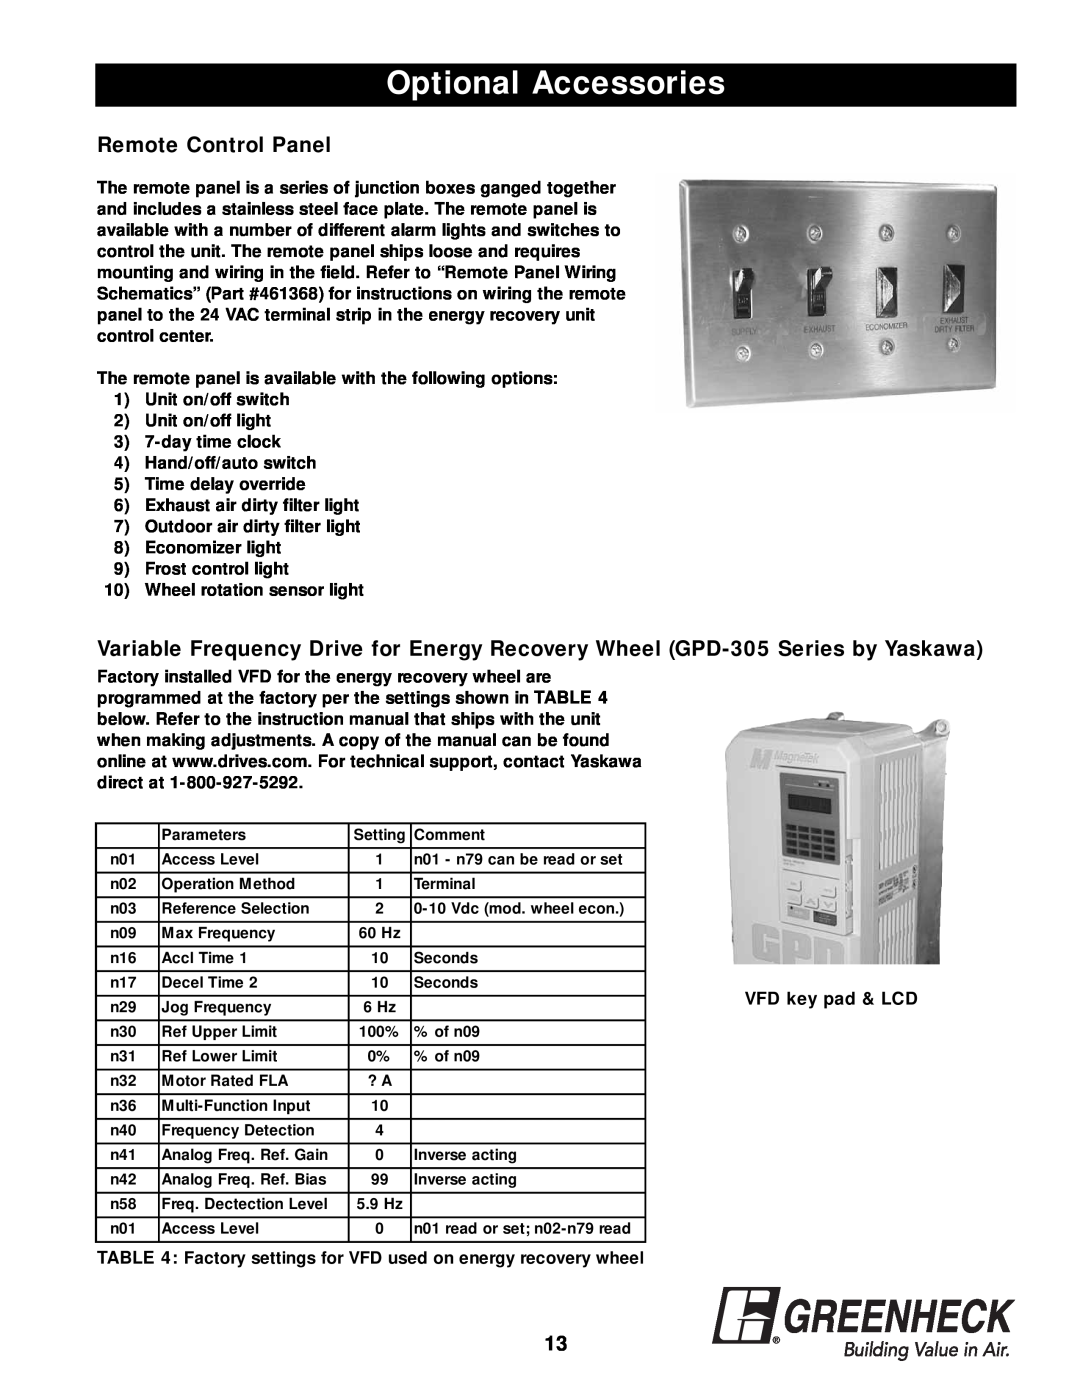 Greenheck Fan APEX-200 warranty Remote Control Panel, Optional Accessories, VFD key pad & LCD 